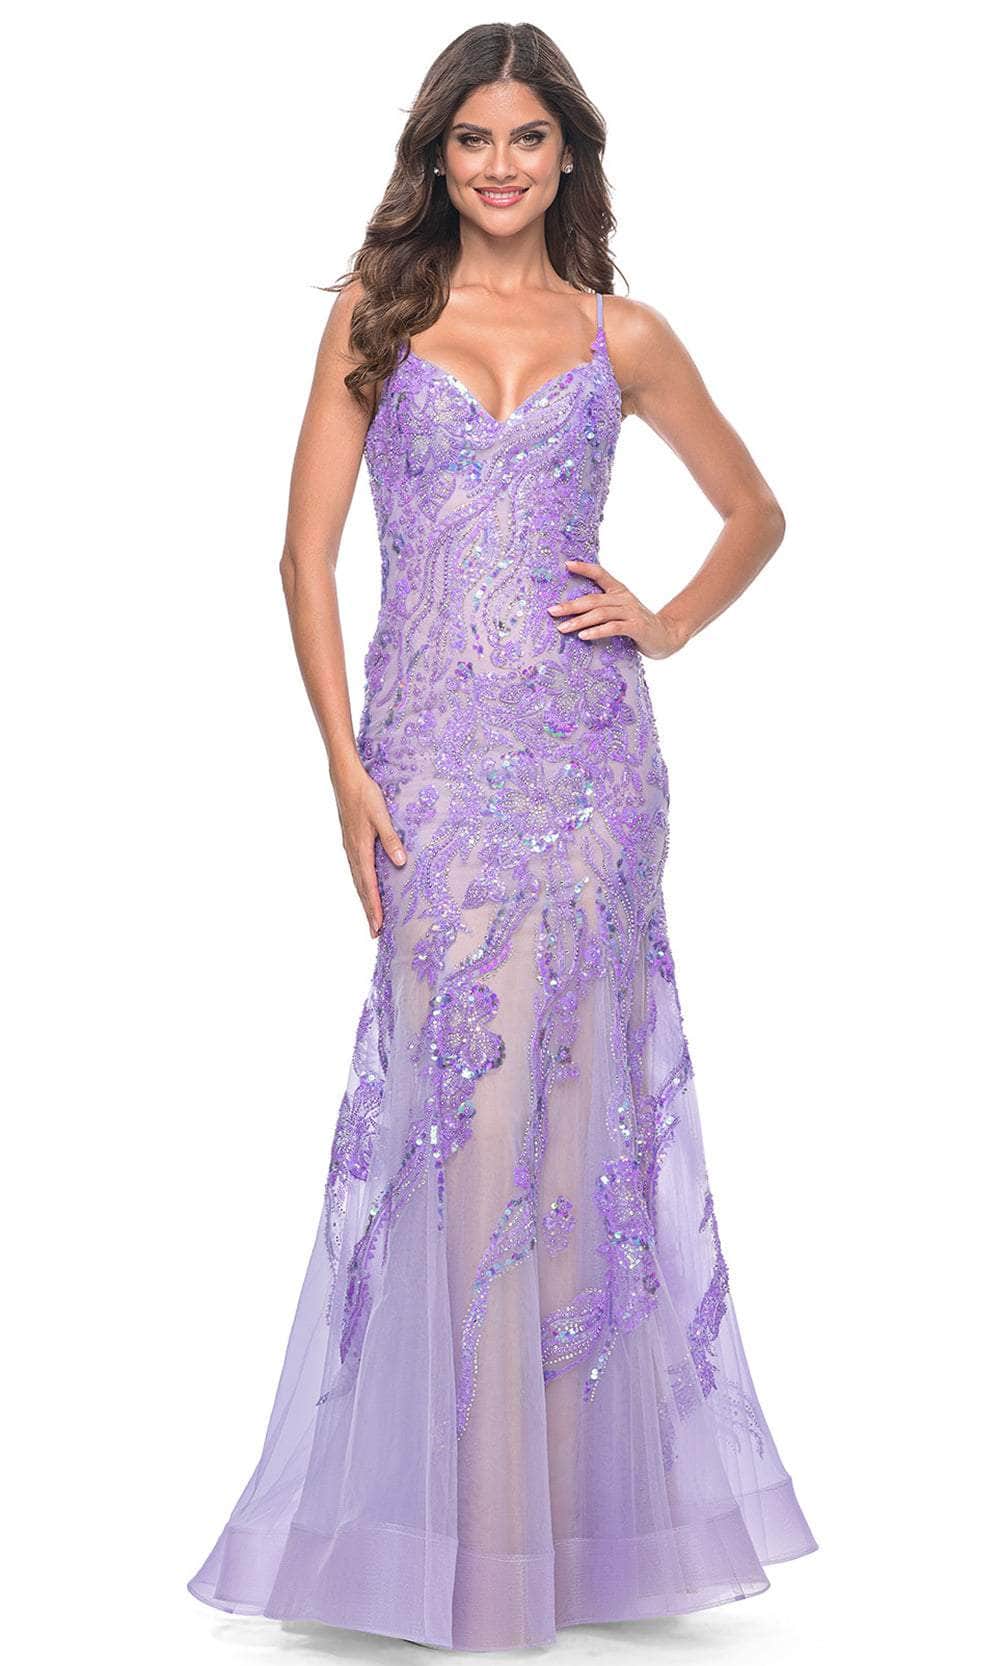 La Femme 32333 - Sleeveless Beaded Mermaid Prom Dress
